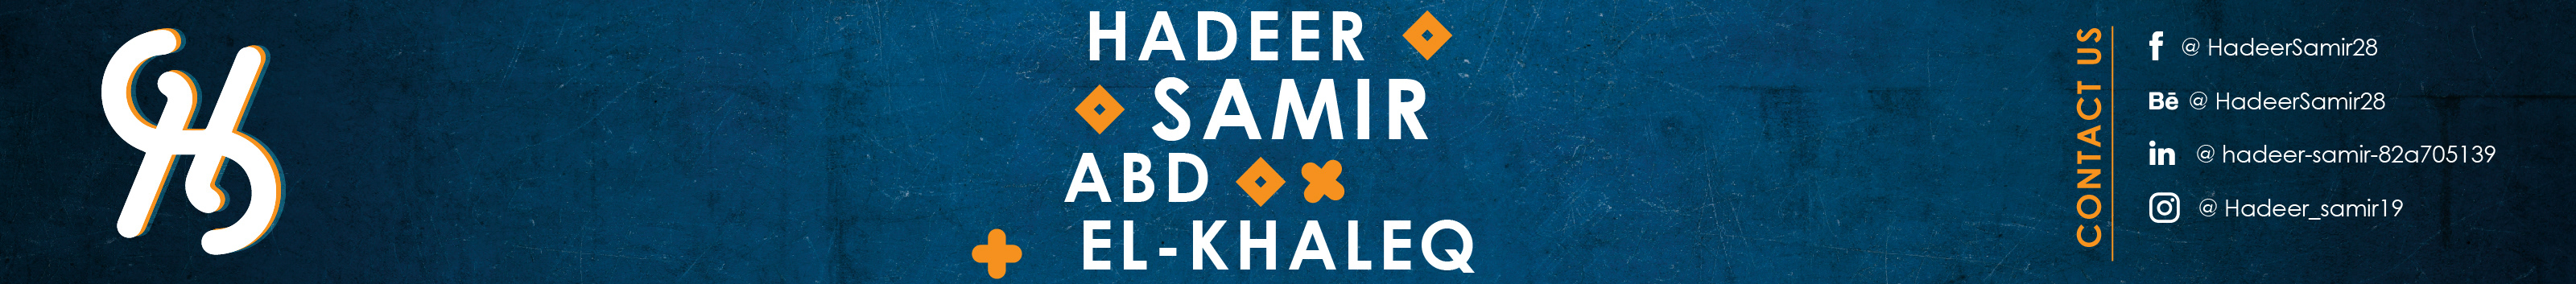 Hadeer Samirs profilbanner